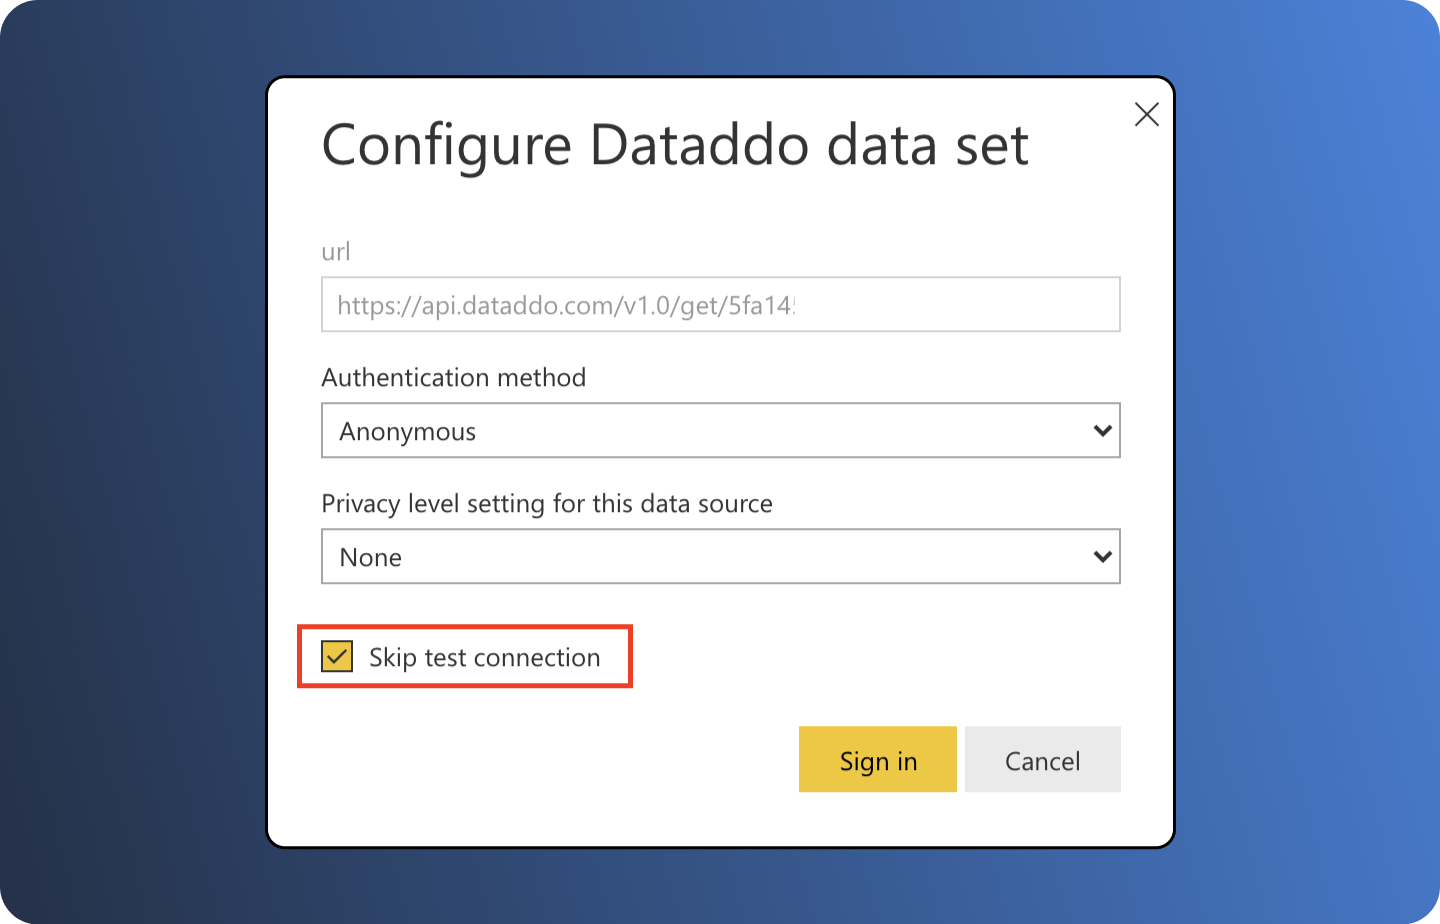 Power BI - Configure Dataddo data set